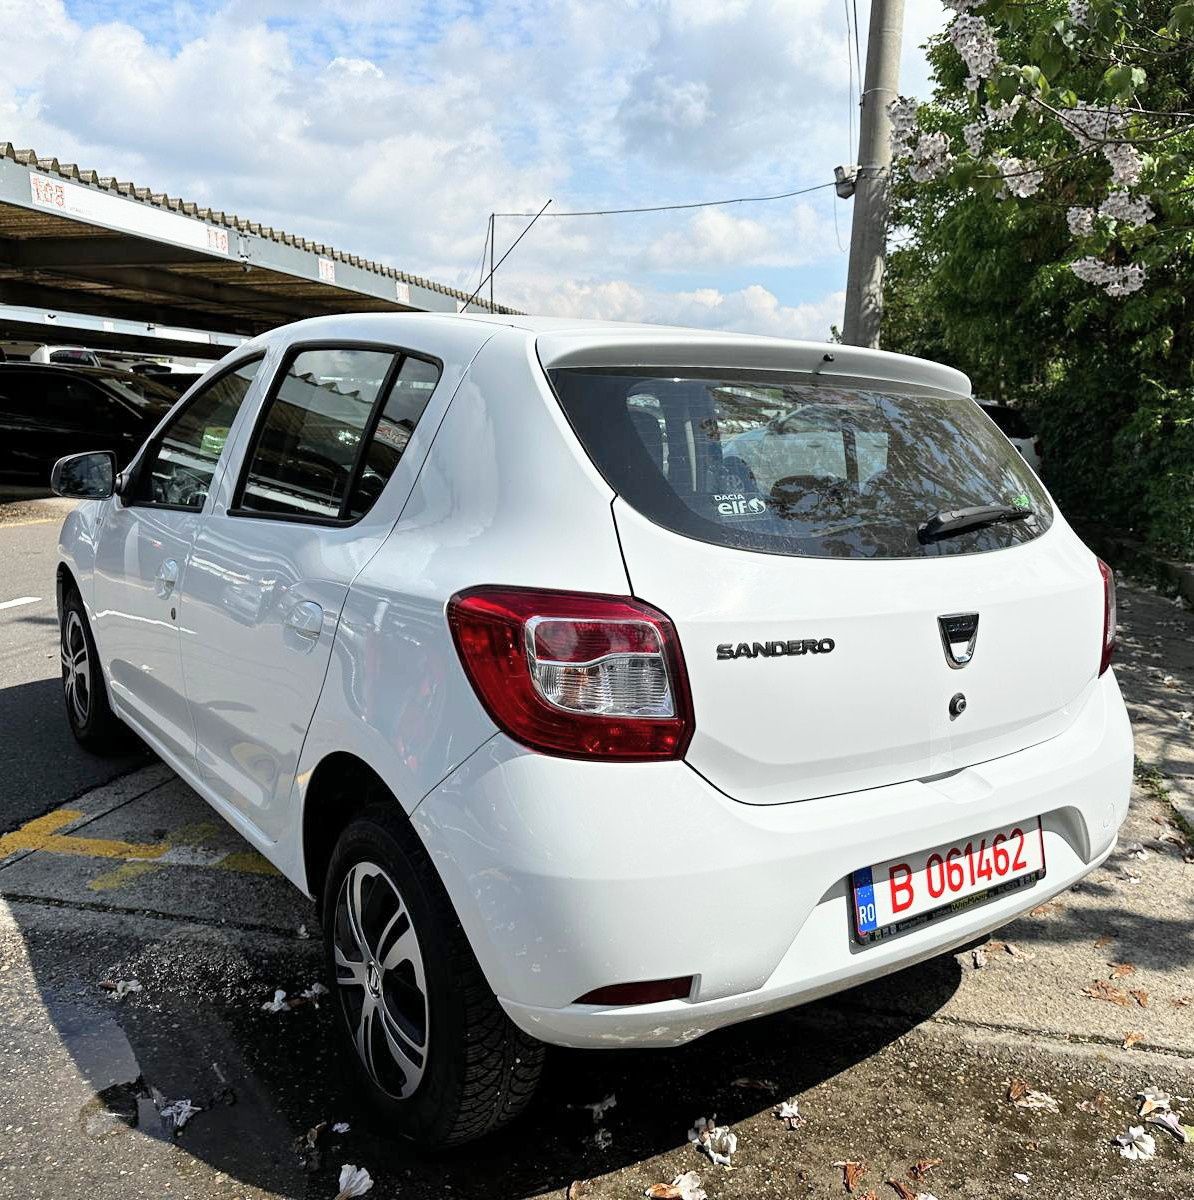 Dacia Sandero 2015, motor 0,9 cmc, navigație